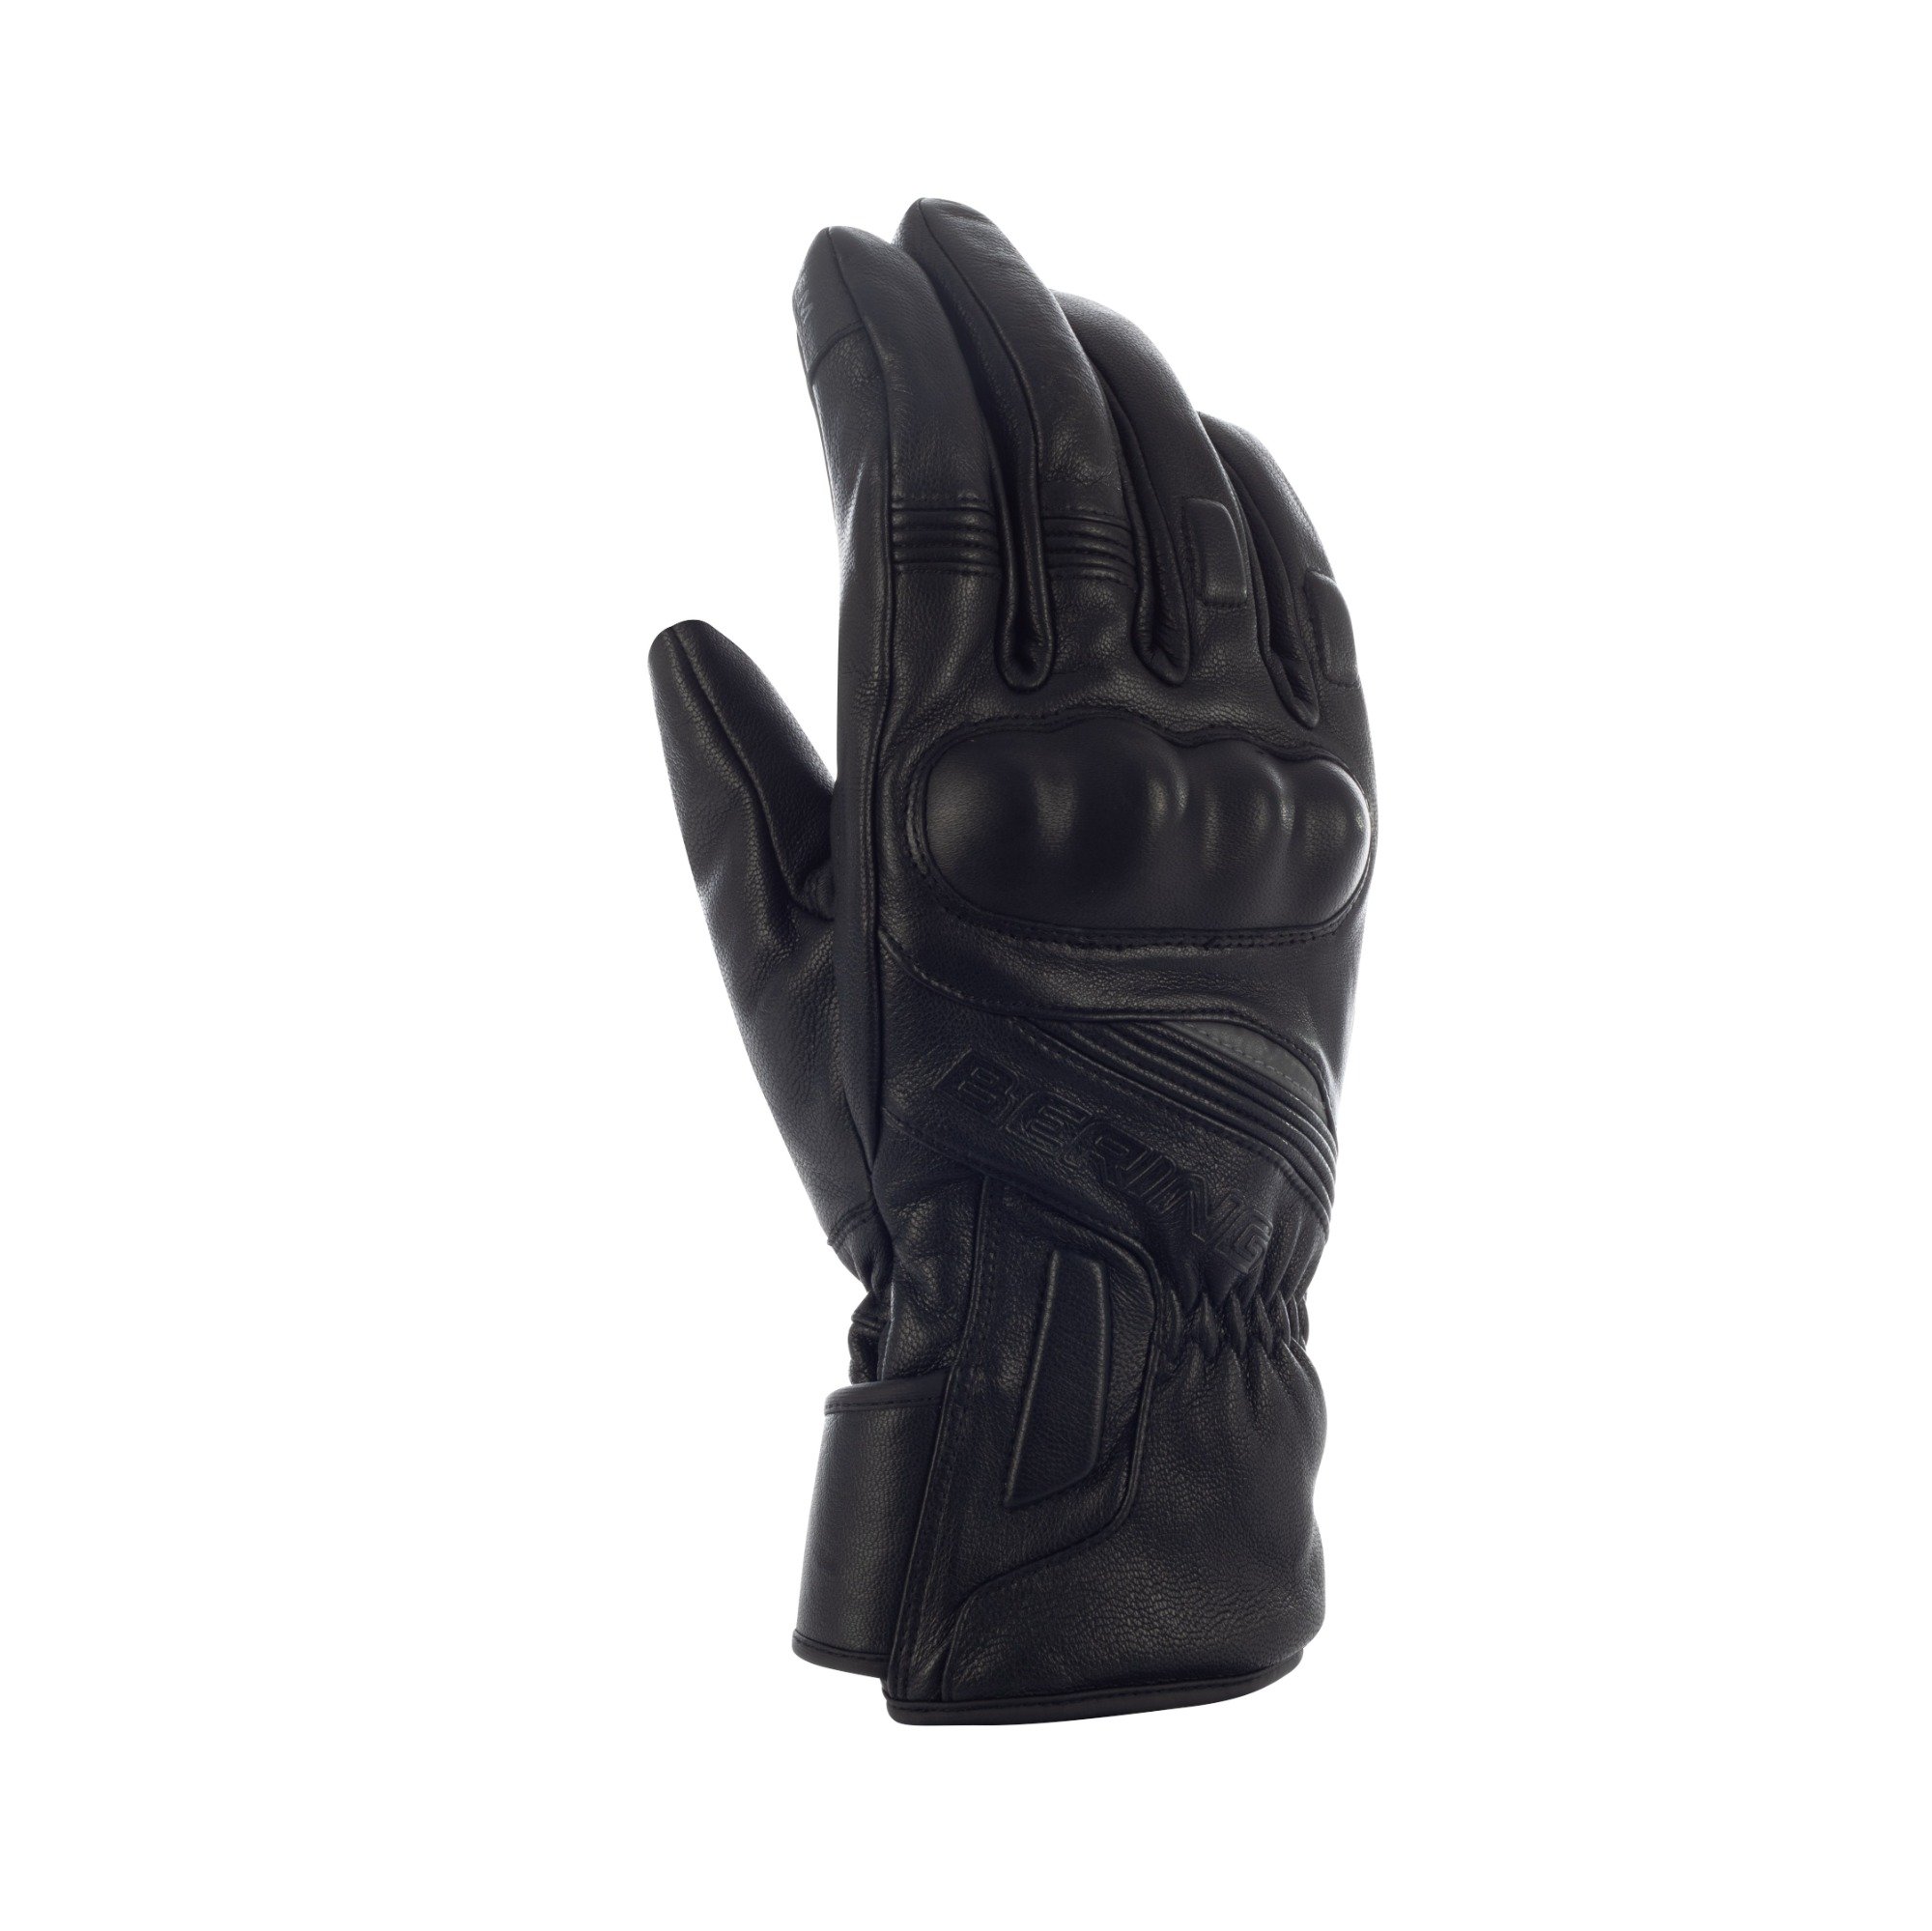 Image of Bering Stryker Gloves Black Size T10 ID 3660815172001